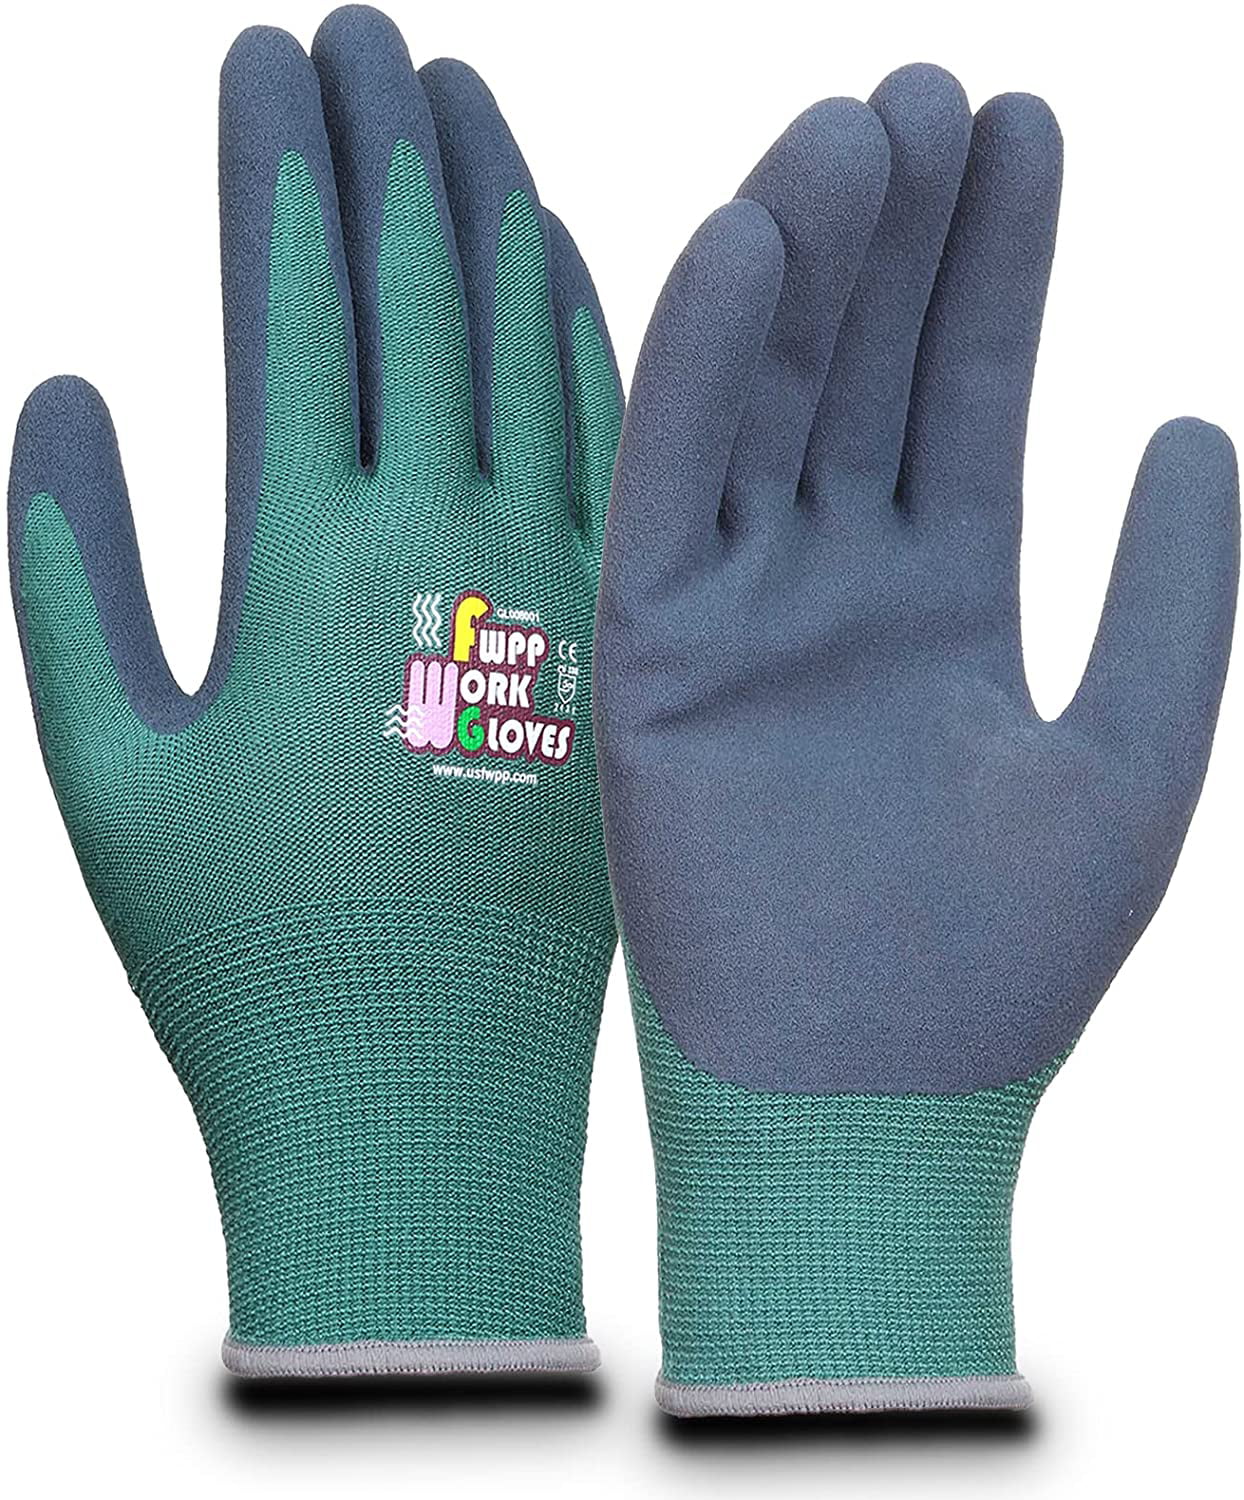 24 x Latex Coated Multi Purpose Grip Gardening Gloves Builders Rubber Gloves 